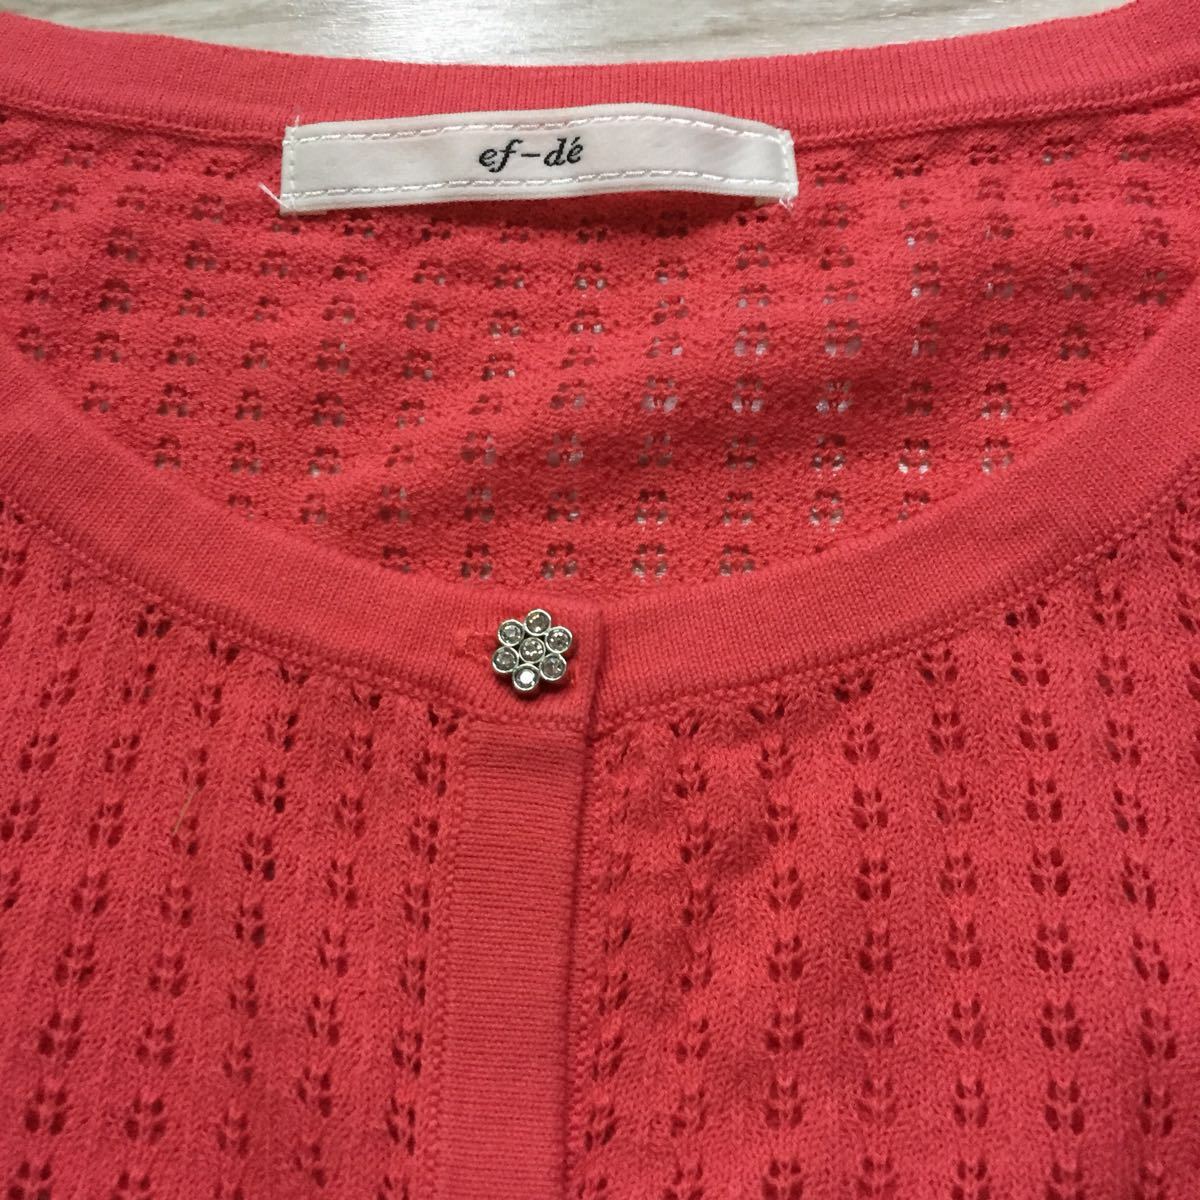  unused not yet arrived ef-de ef-de largish cotton . flower motif biju- button ... braided short sleeves cardigan 2015 size 21 salmon pink series red?